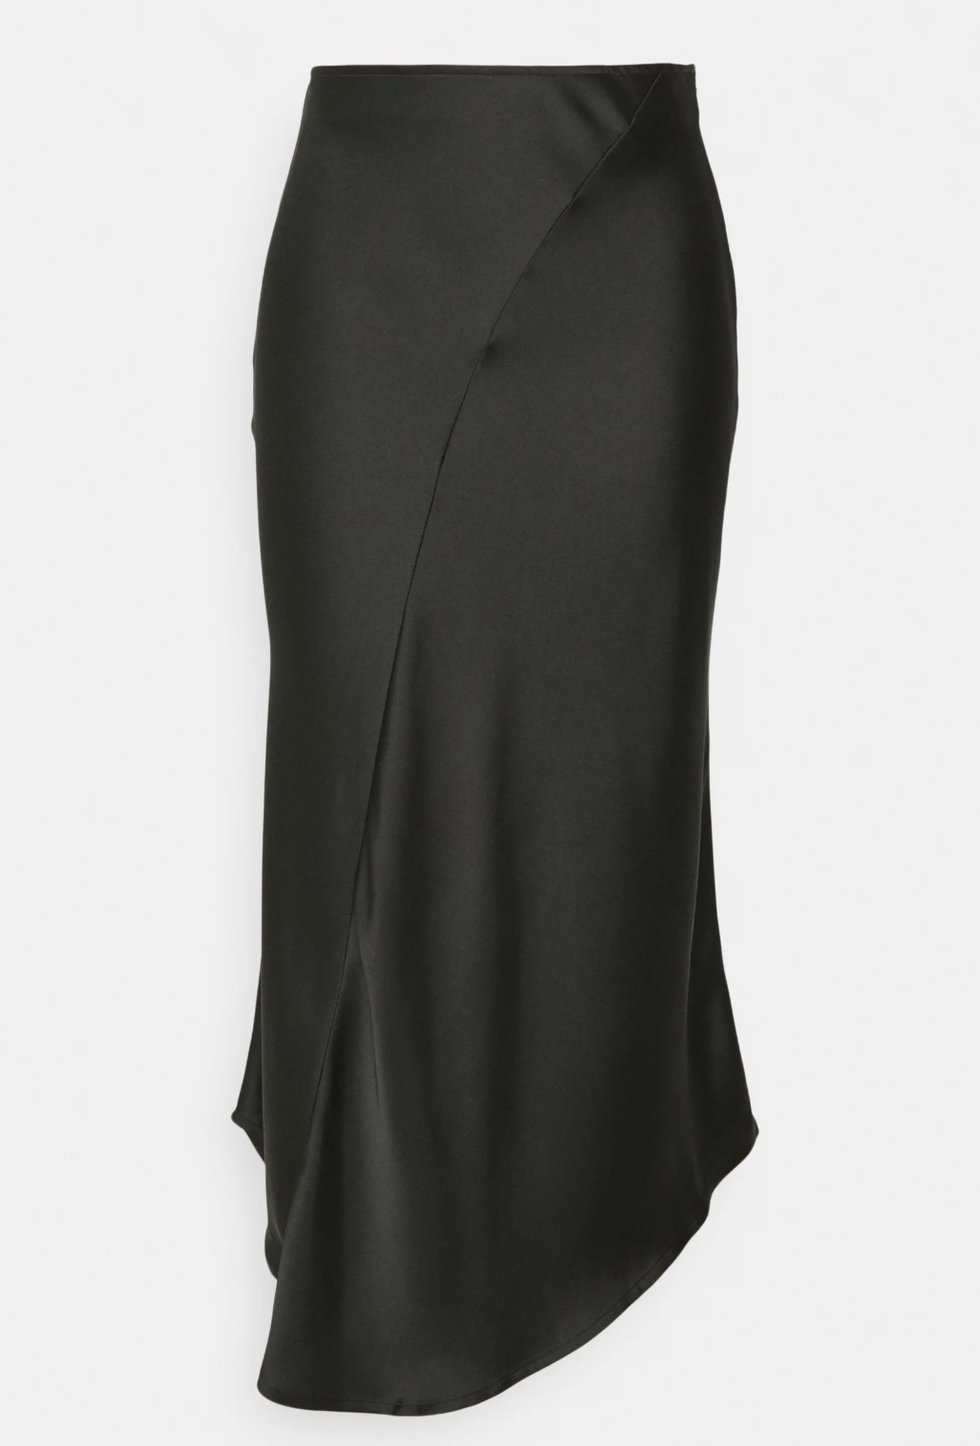 moss copenhagen black long skirt in zalando